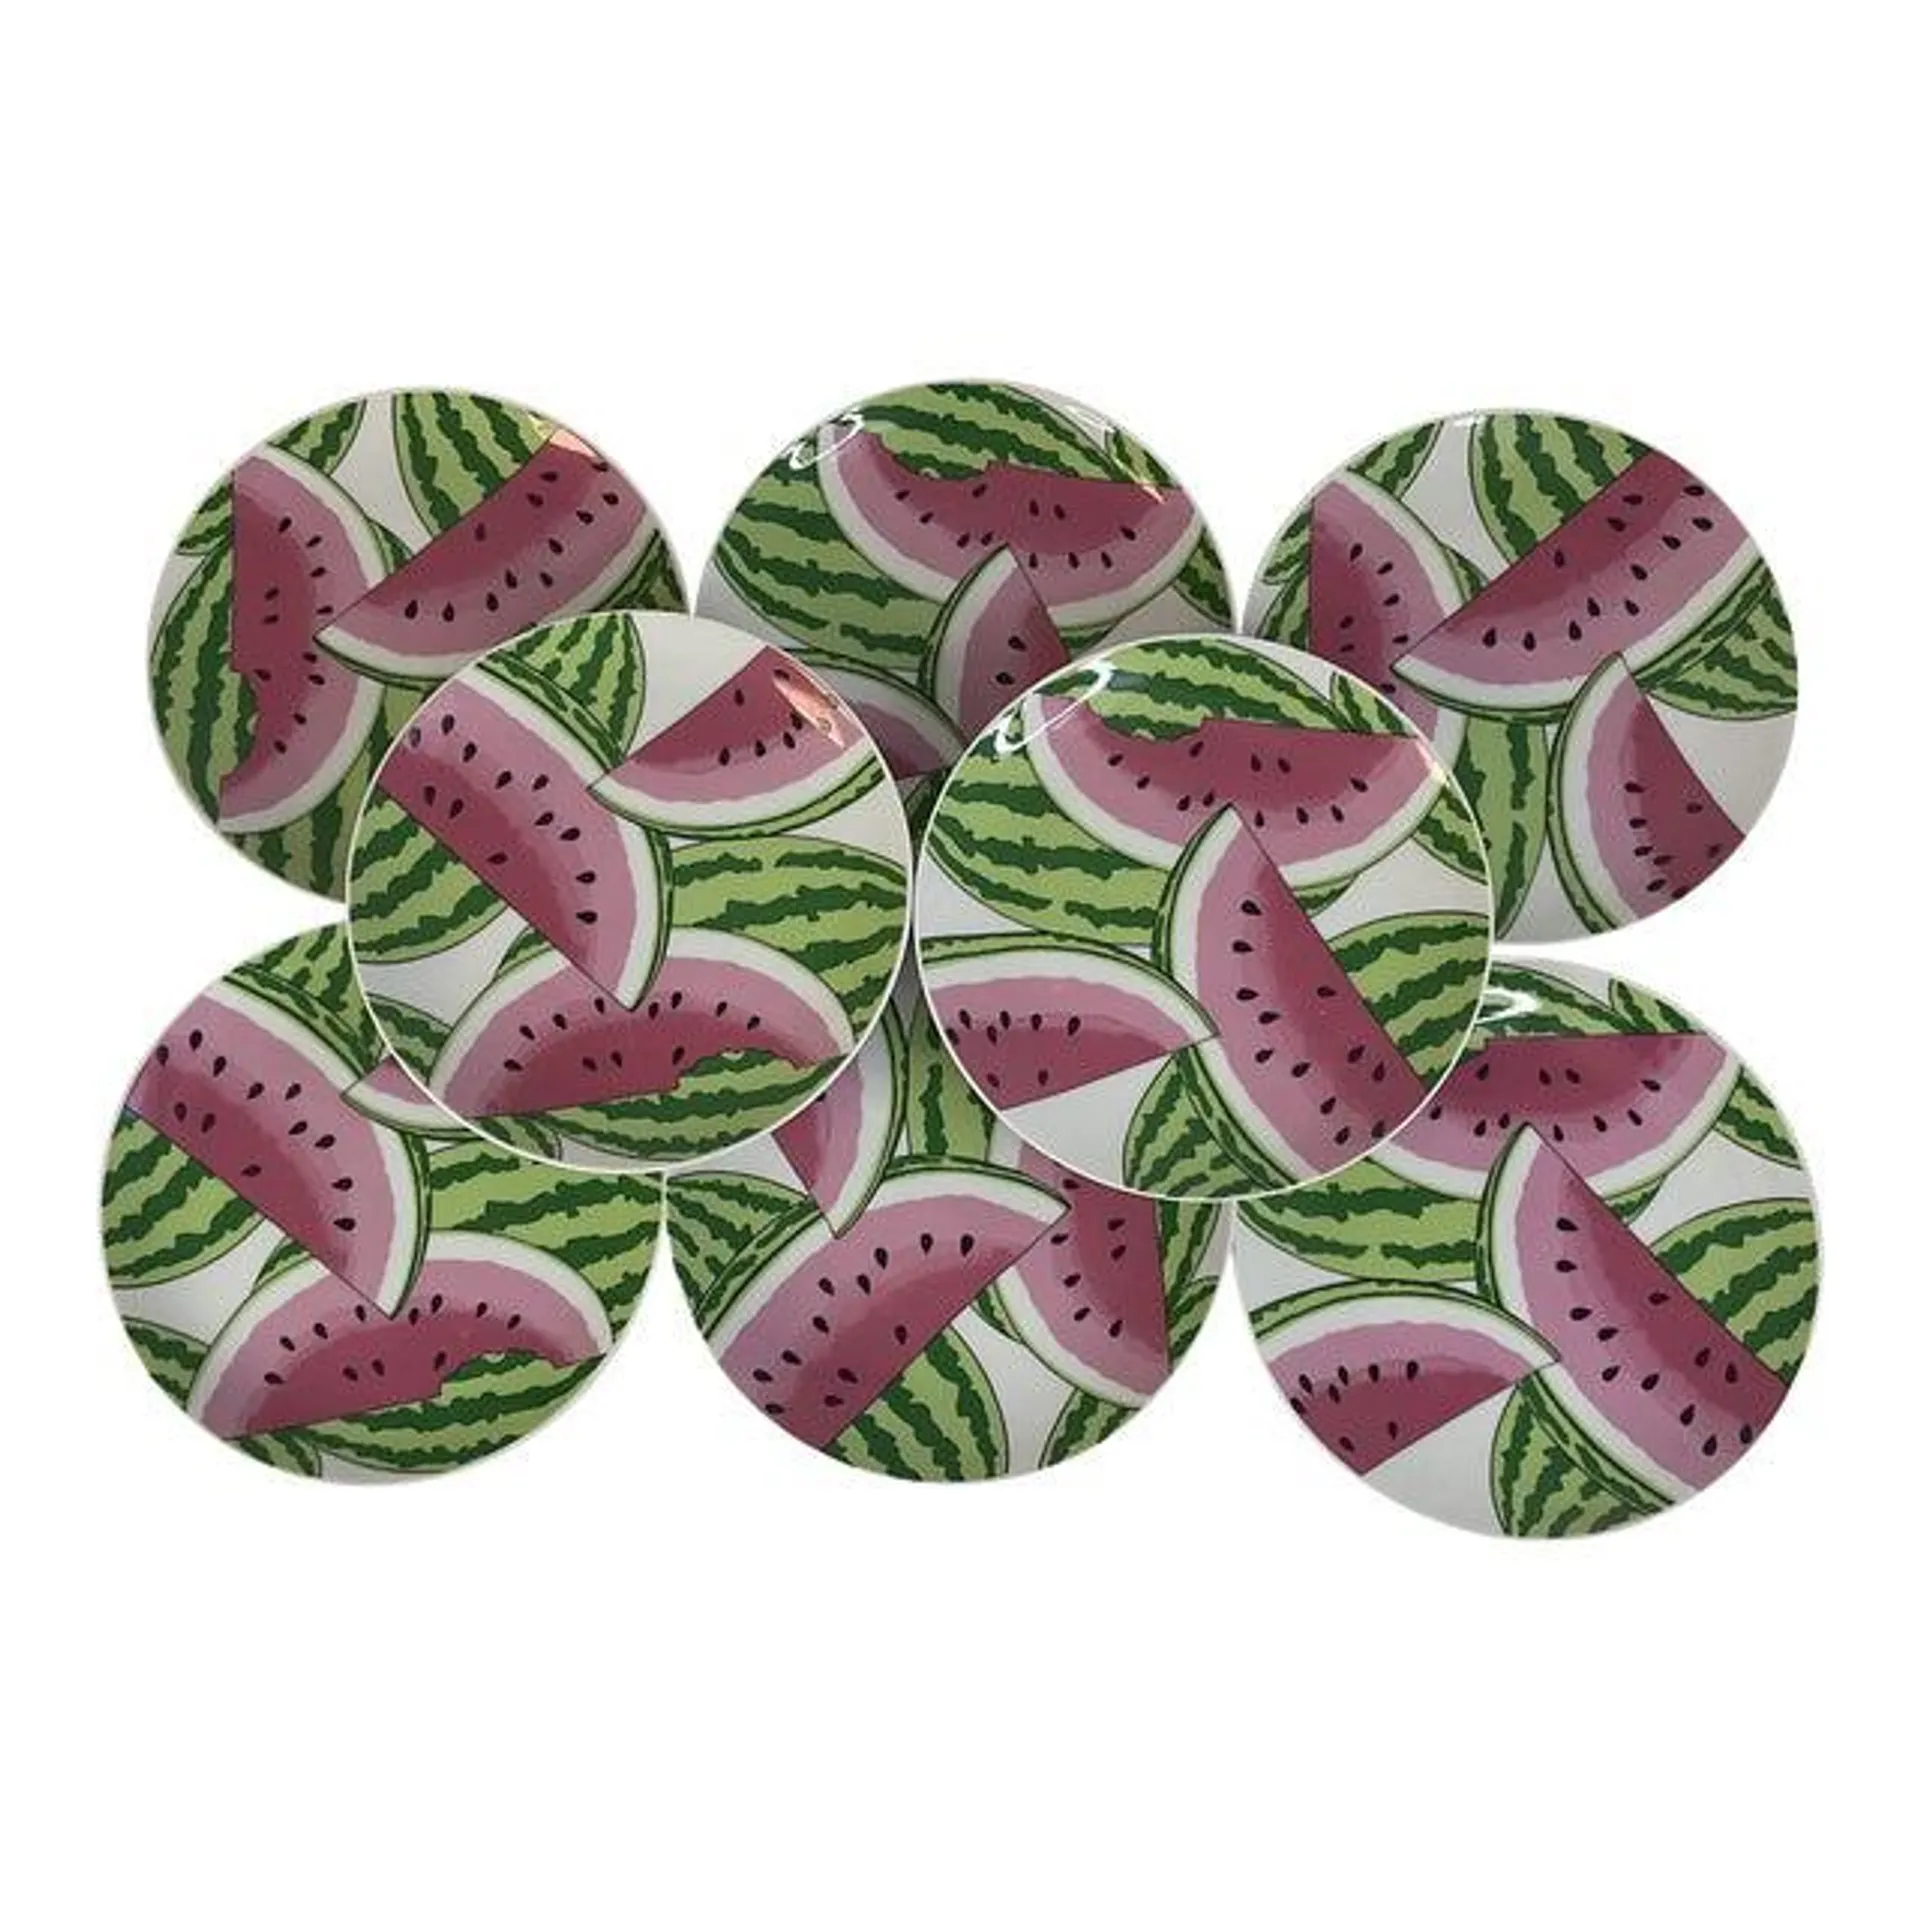 Vintage Watermelon Luncheon Salad Plates - Set of 8.